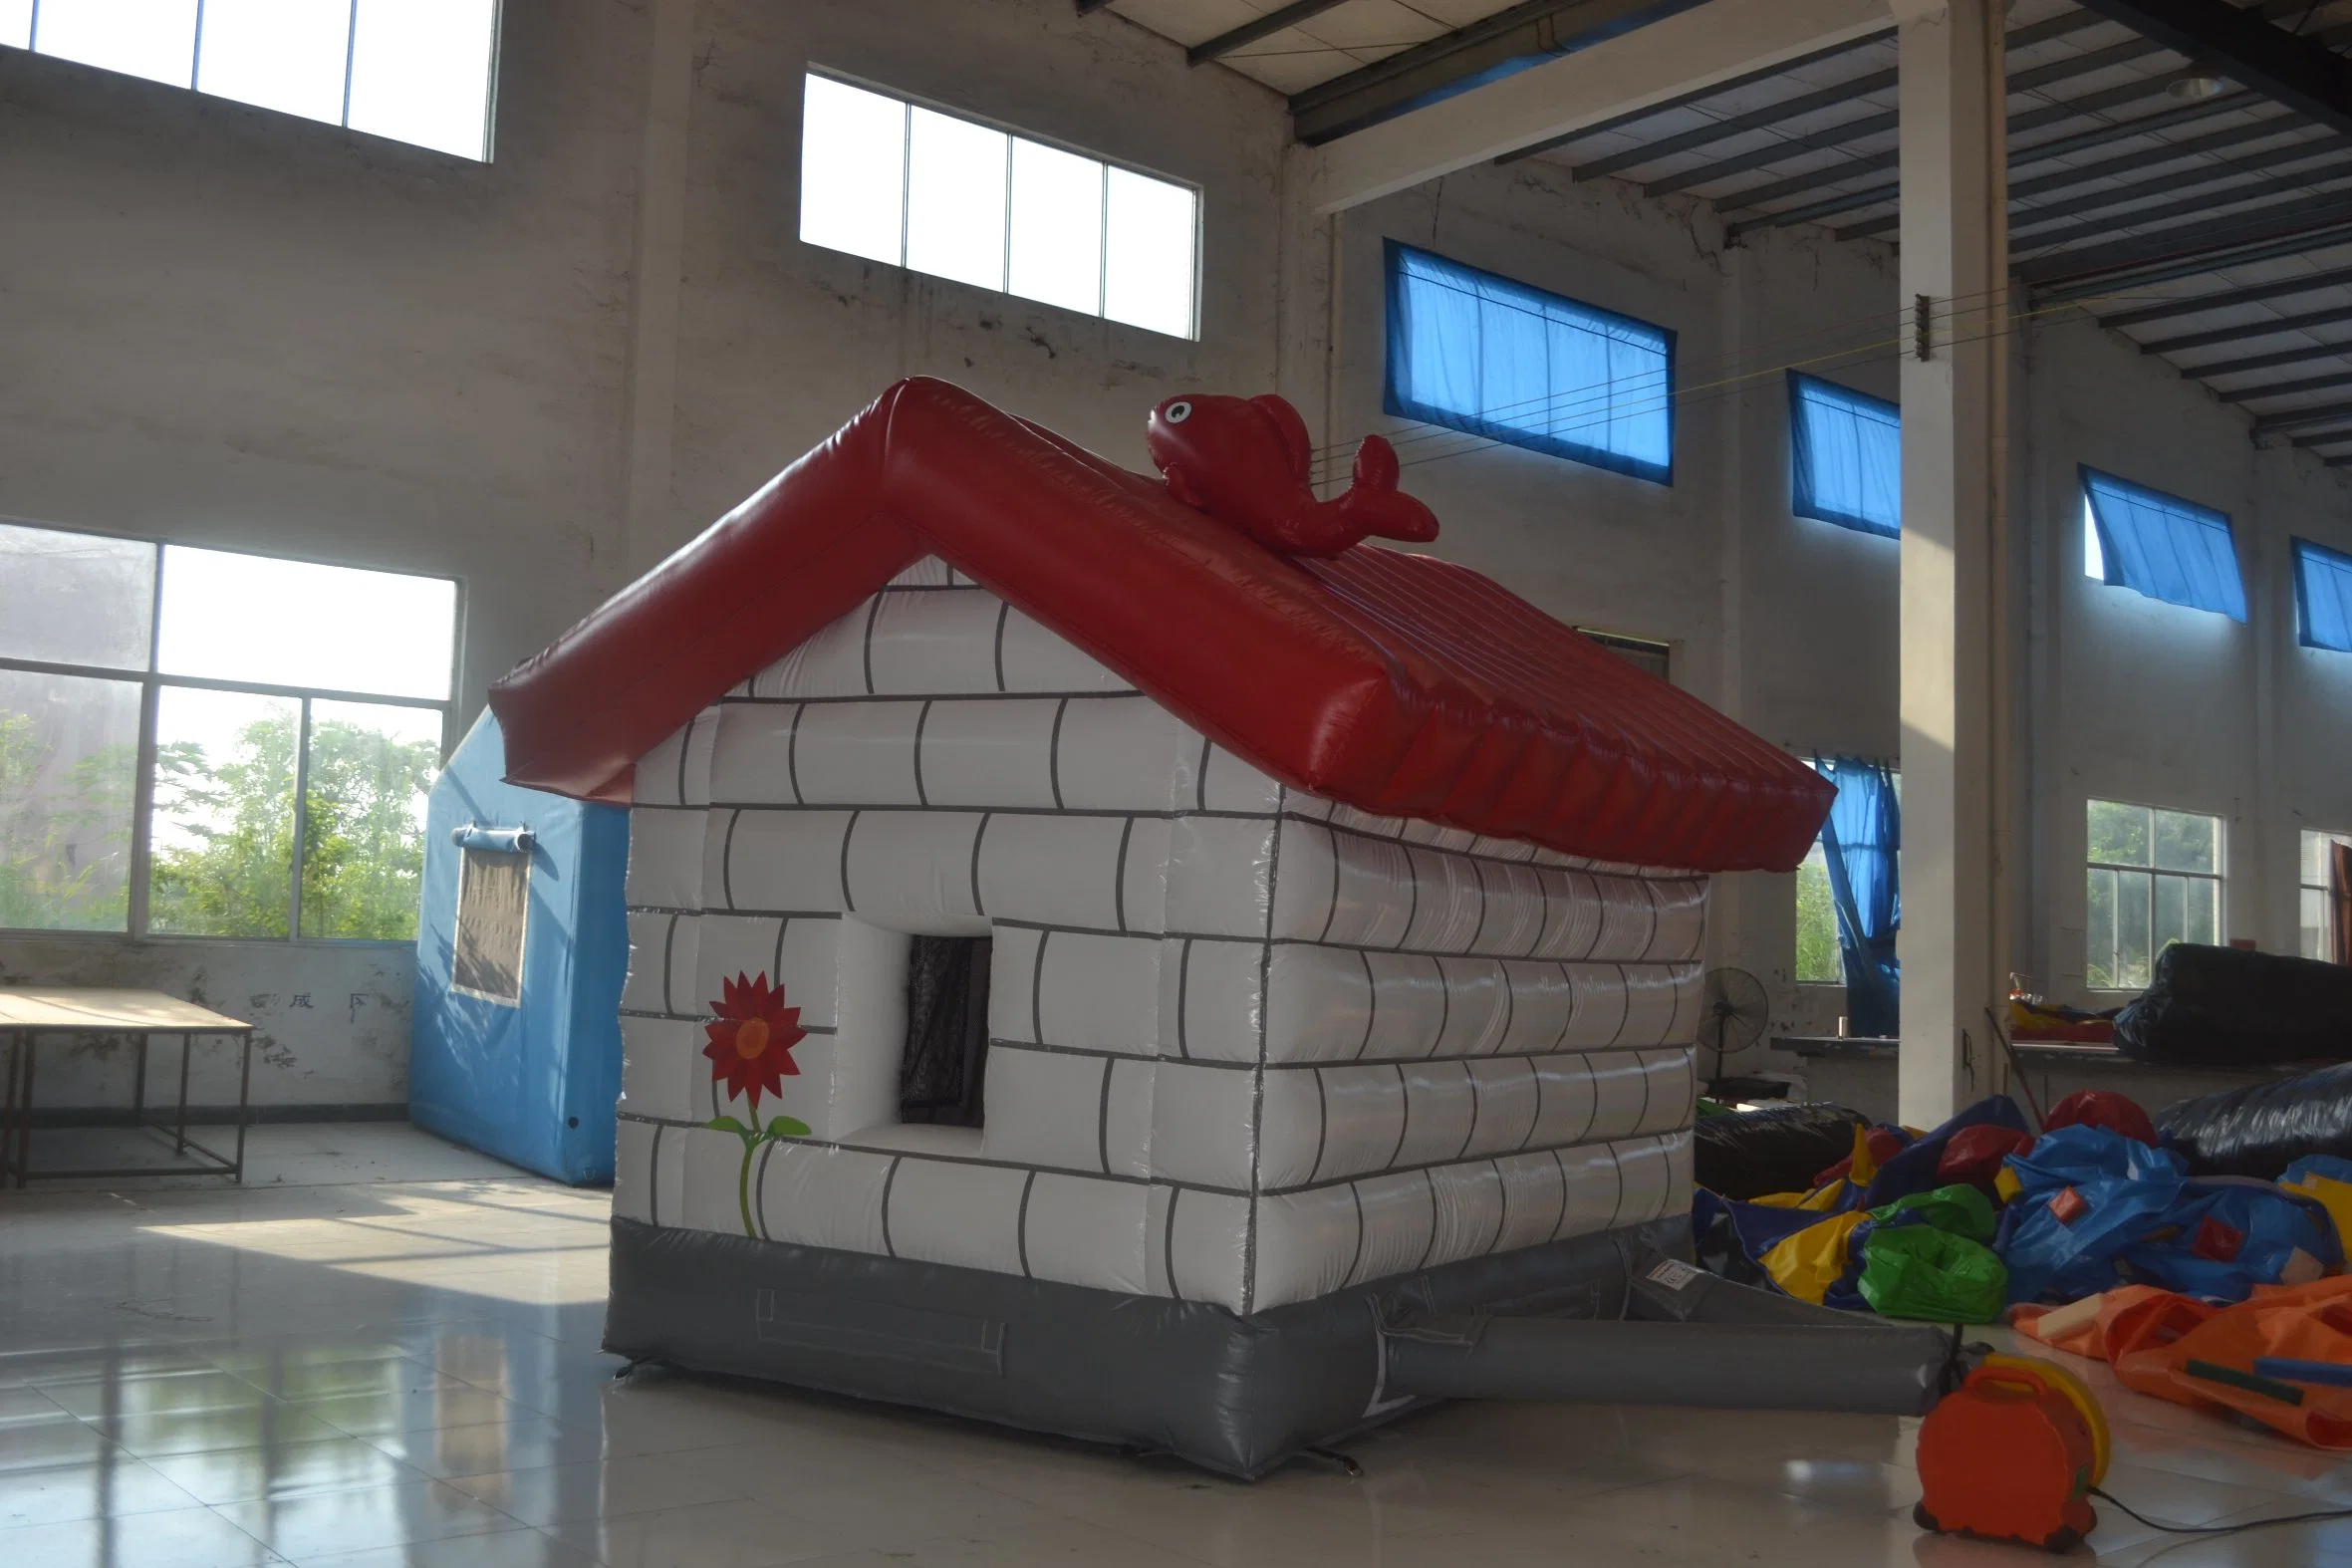 Casa de saltos inflable para niños (AQ262)